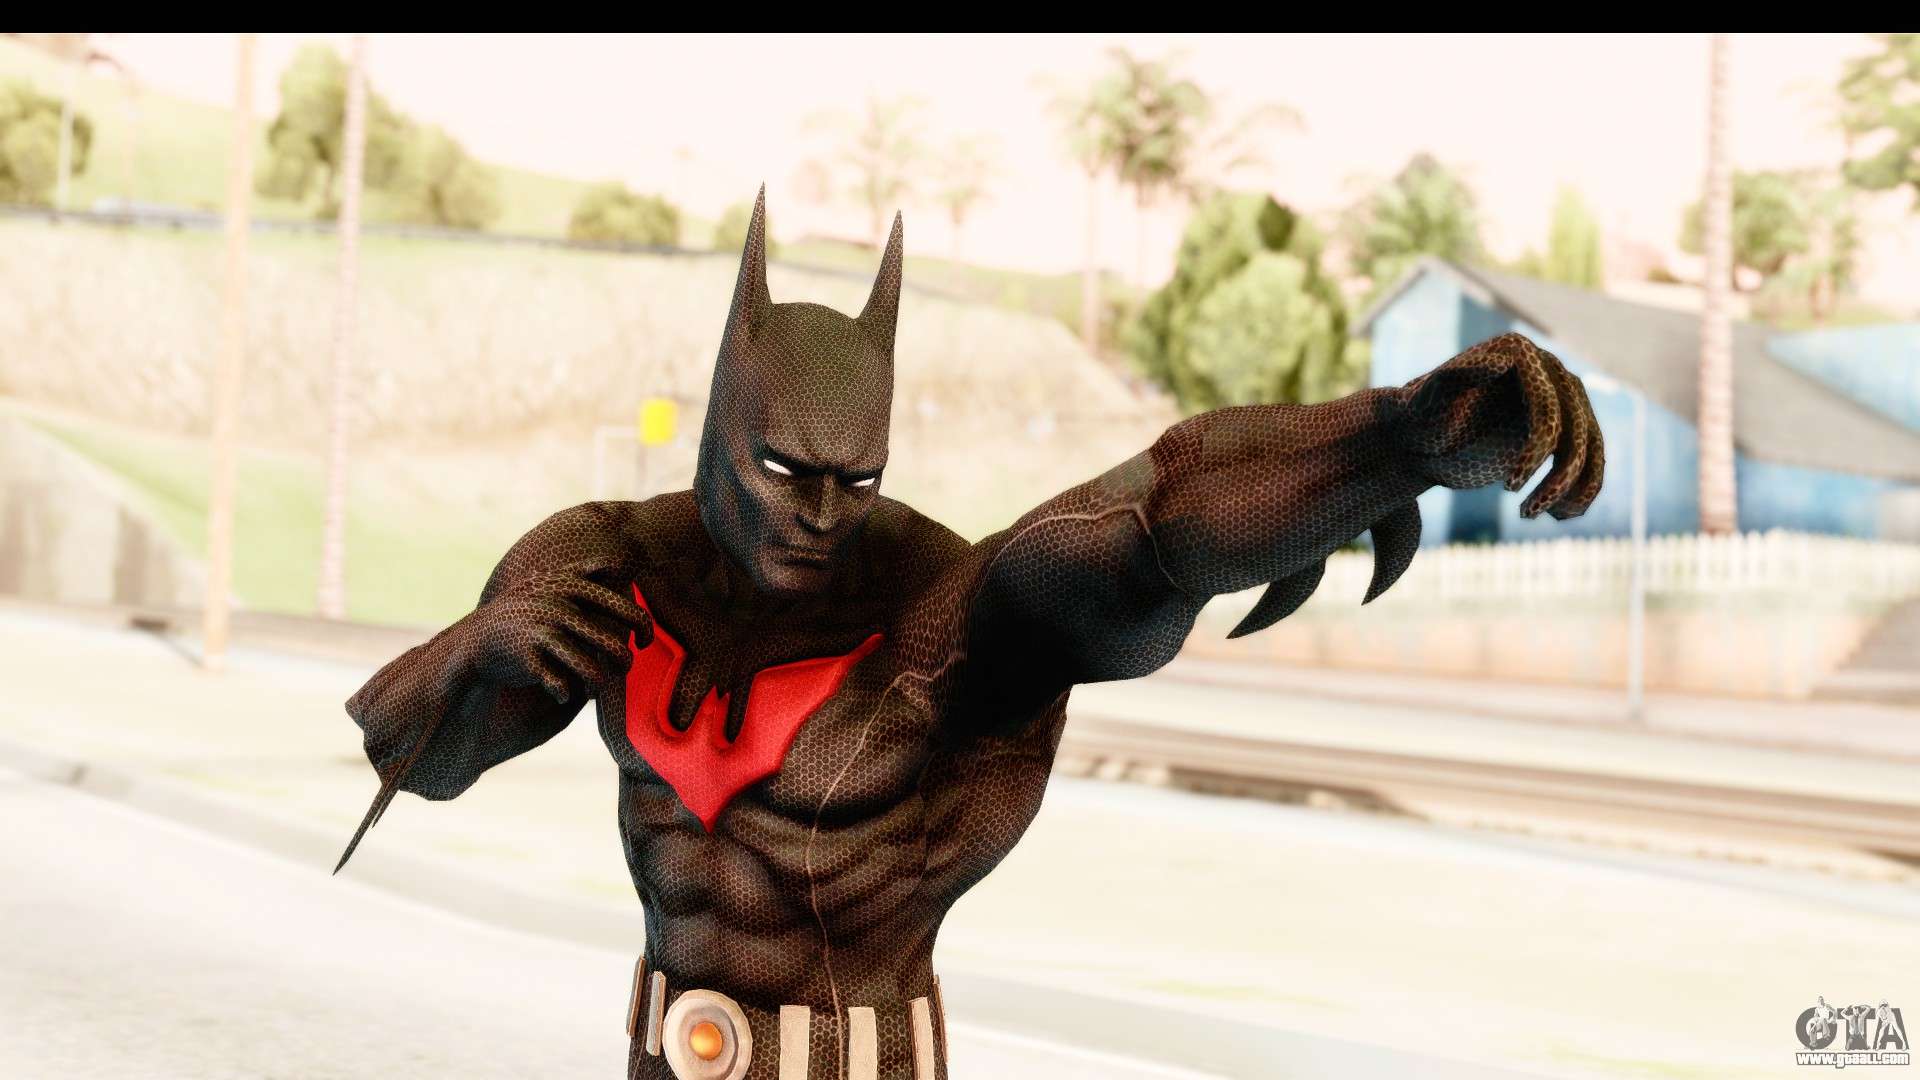 Animated Batman Begins skin mod for Arkham City by